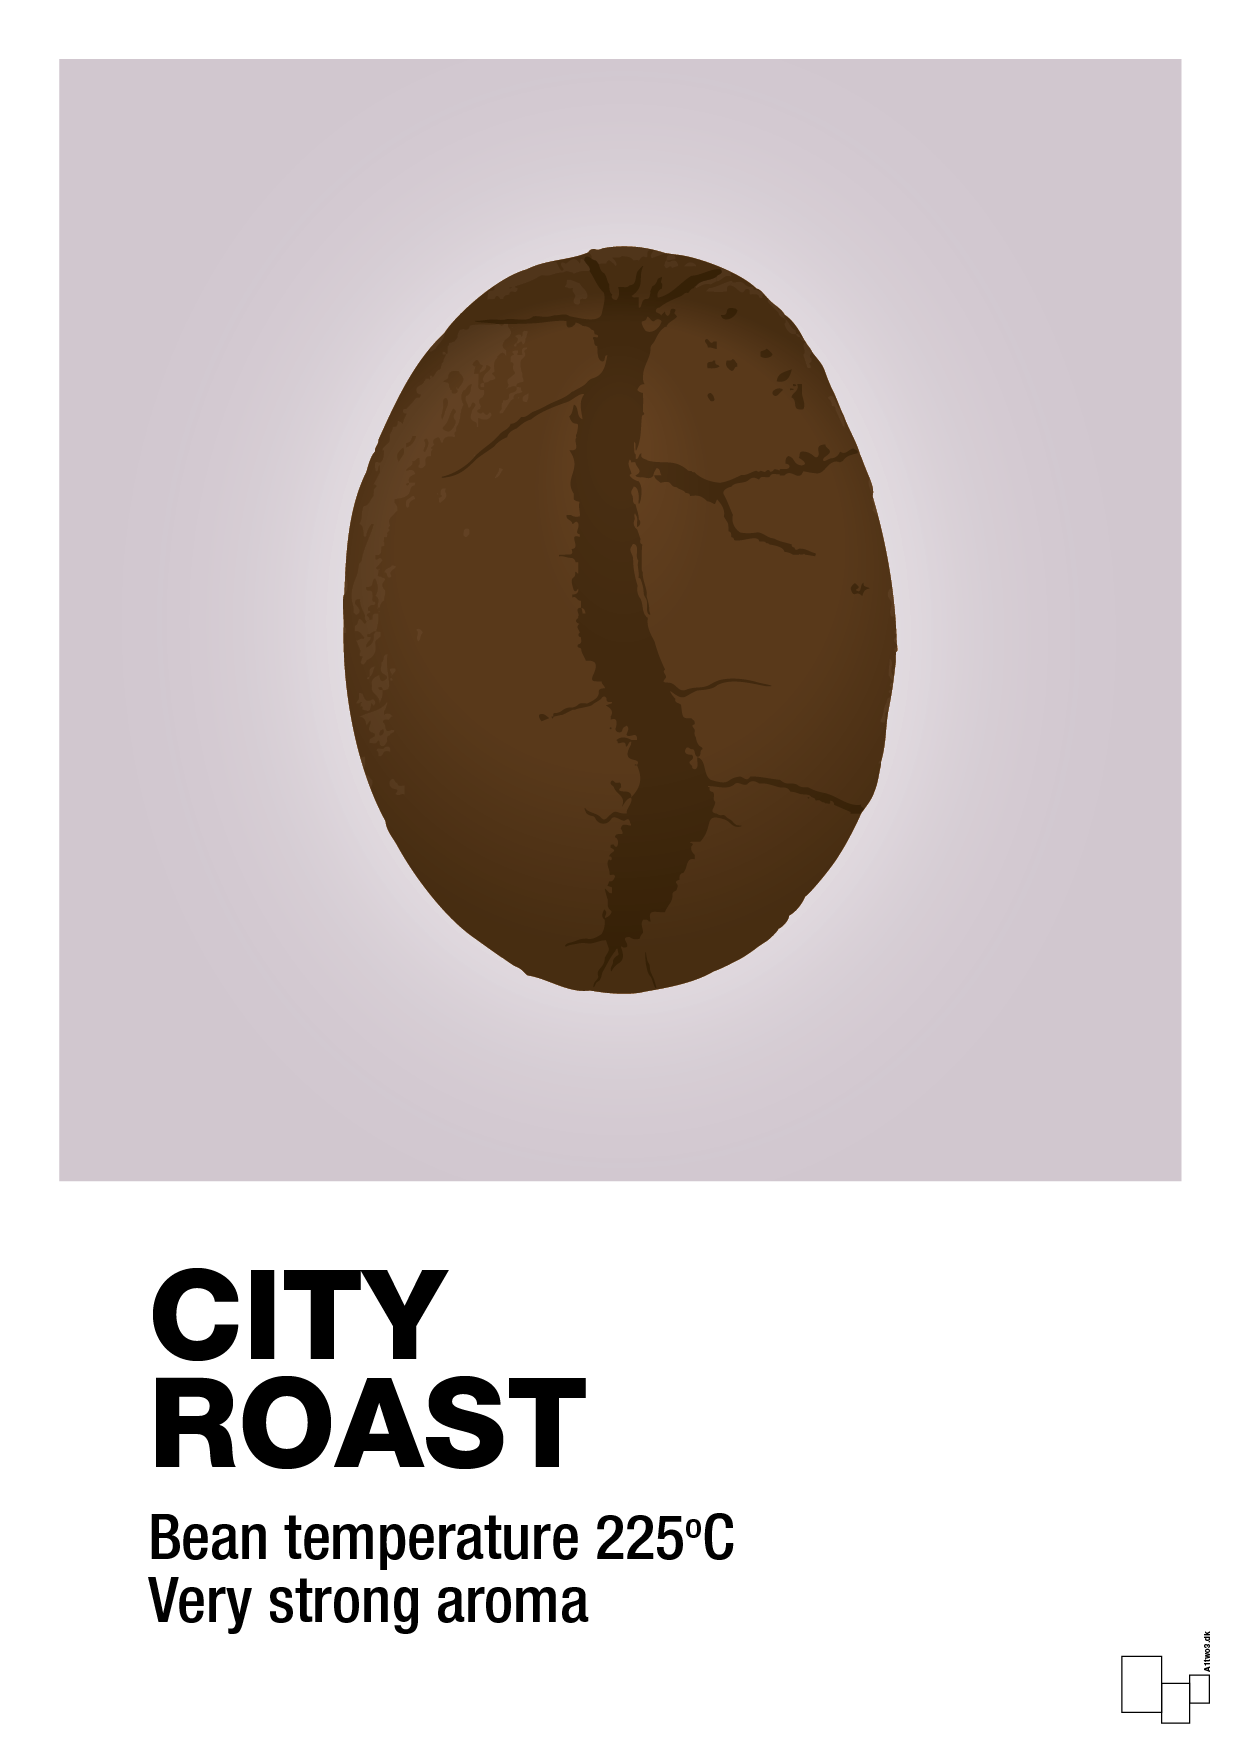 city roast - Plakat med Mad & Drikke i Dusty Lilac